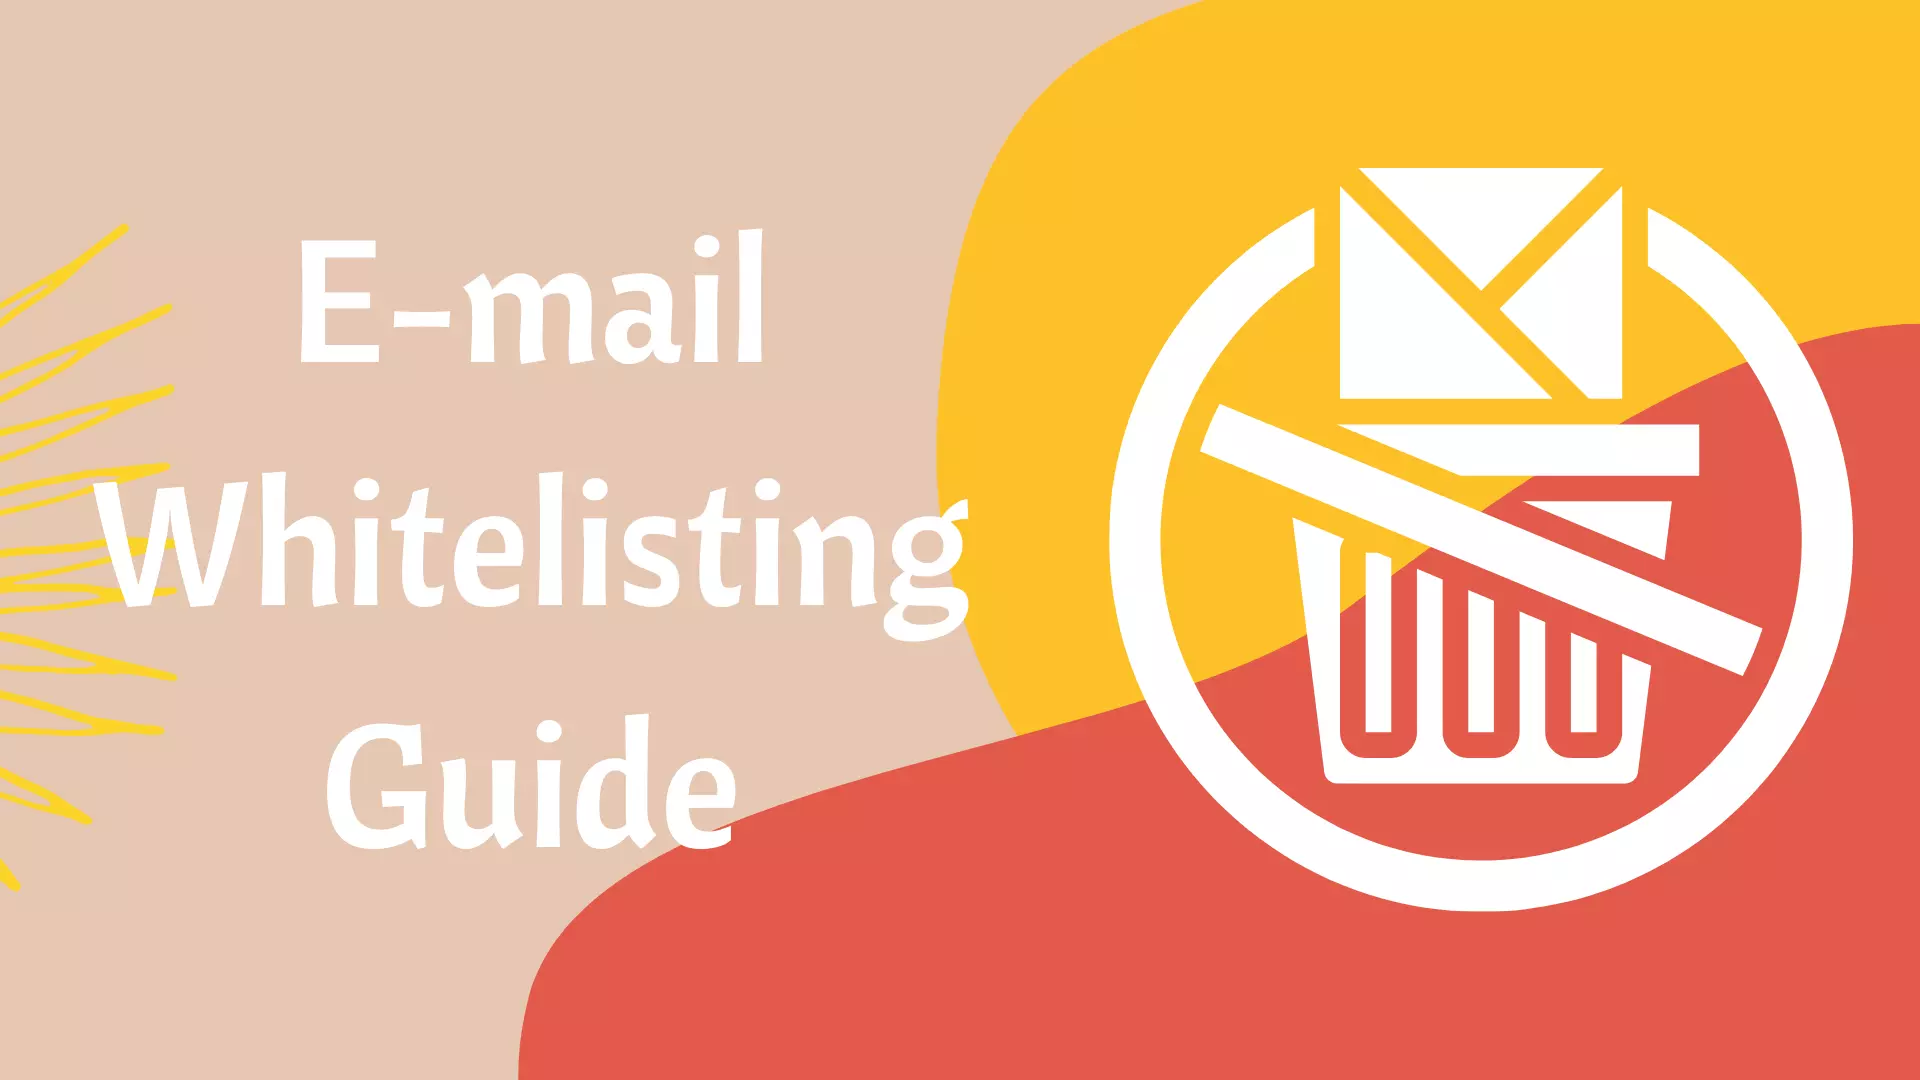 E-mail Whitelisting Guide